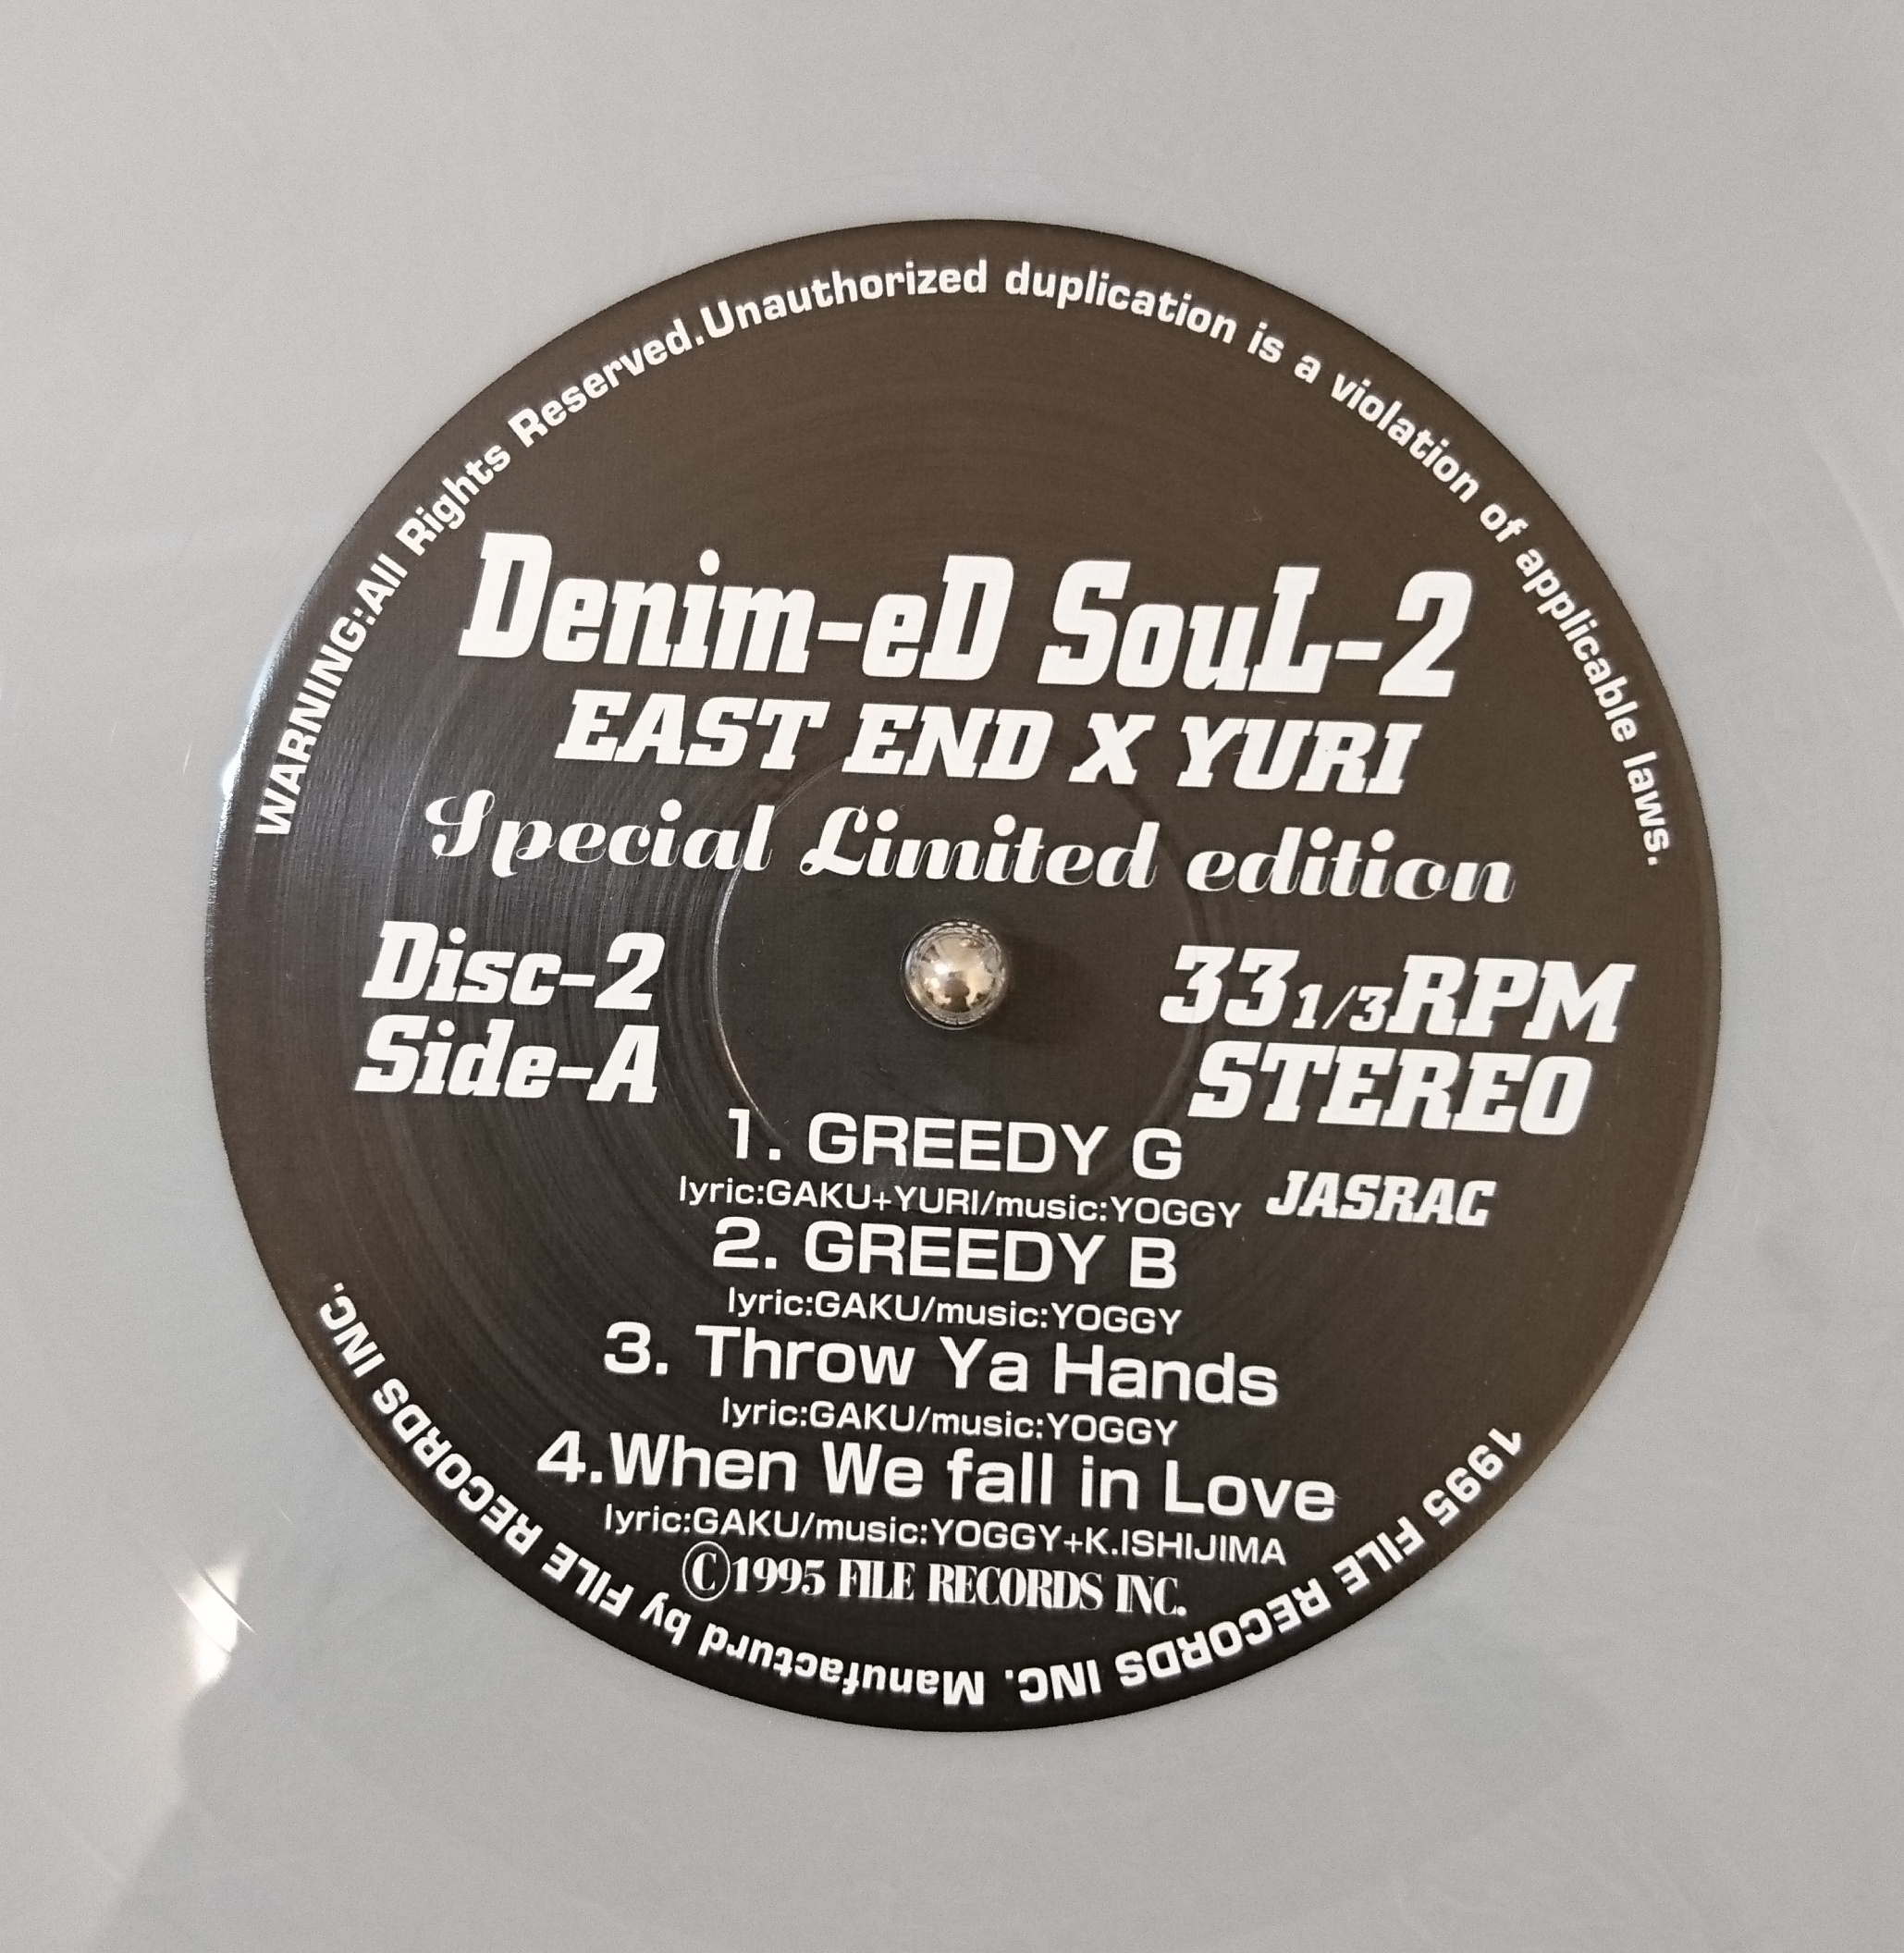 Denim-ed soul 2